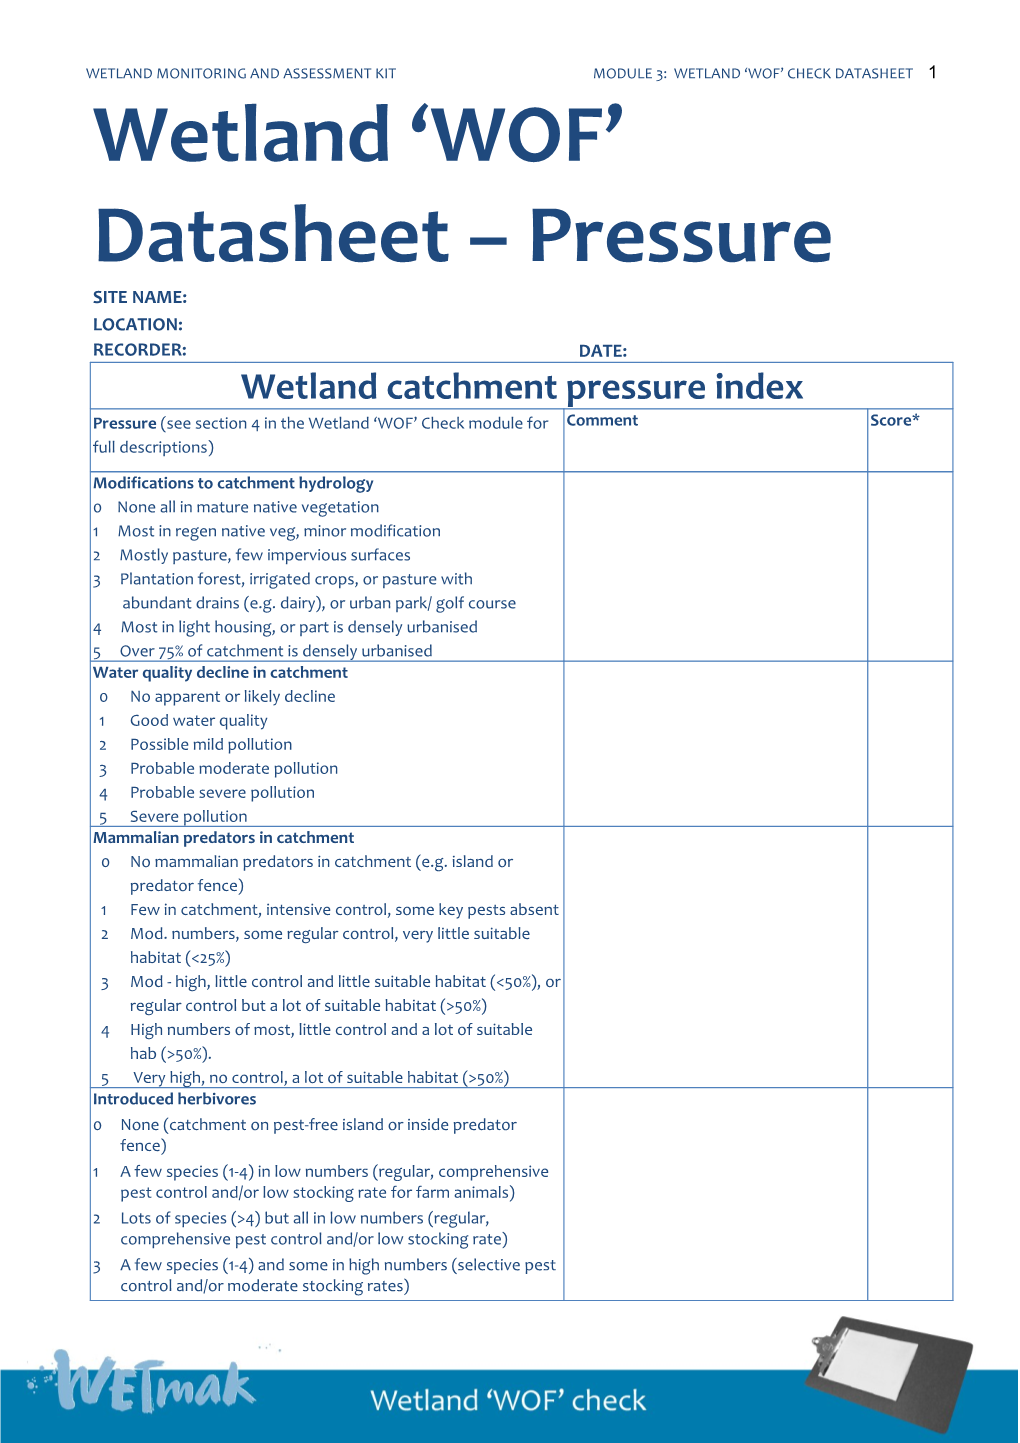 Wetland Monitoring and Assessment Kit Module 3: Wetland Wof Check Datasheet 1